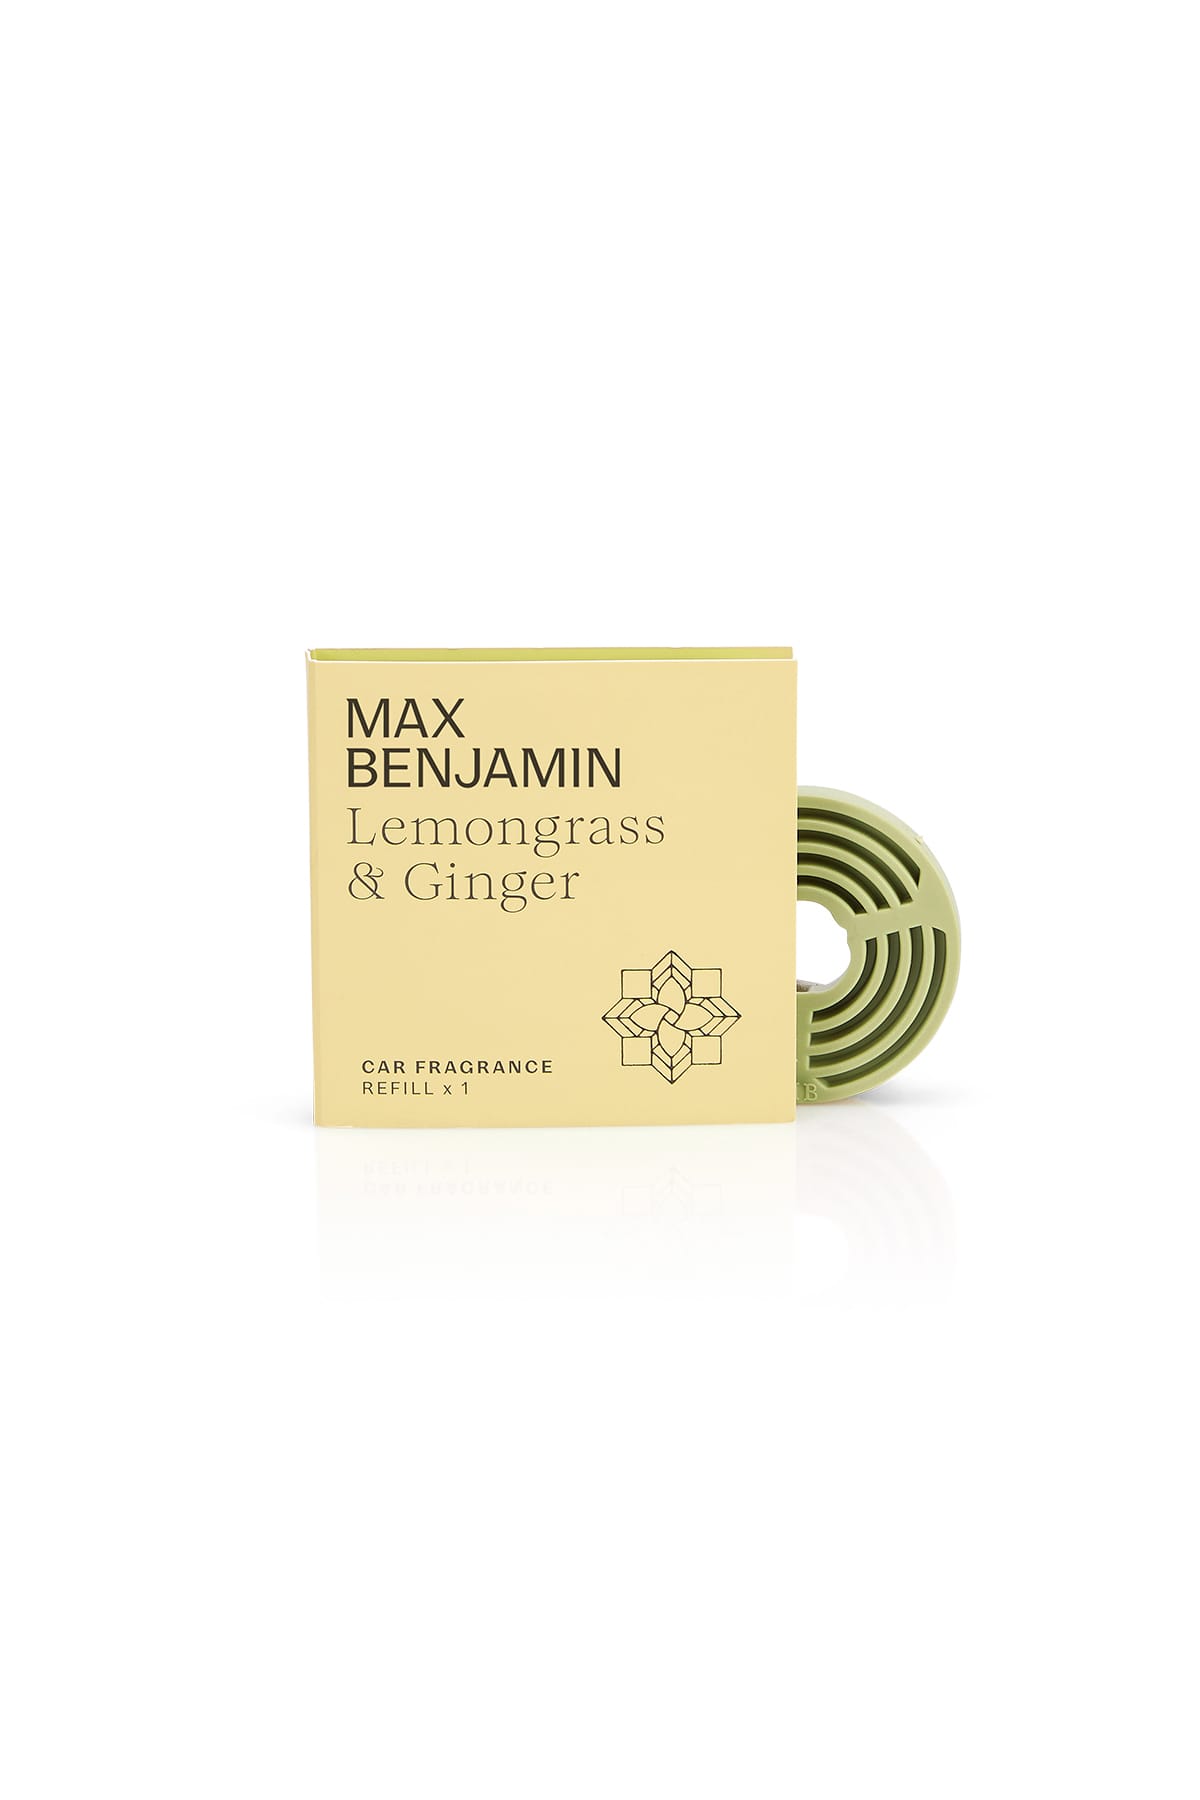 Autoduft Car Fragrance Refill Lemongrass & Ginger Duftkarten Max Benjamin 